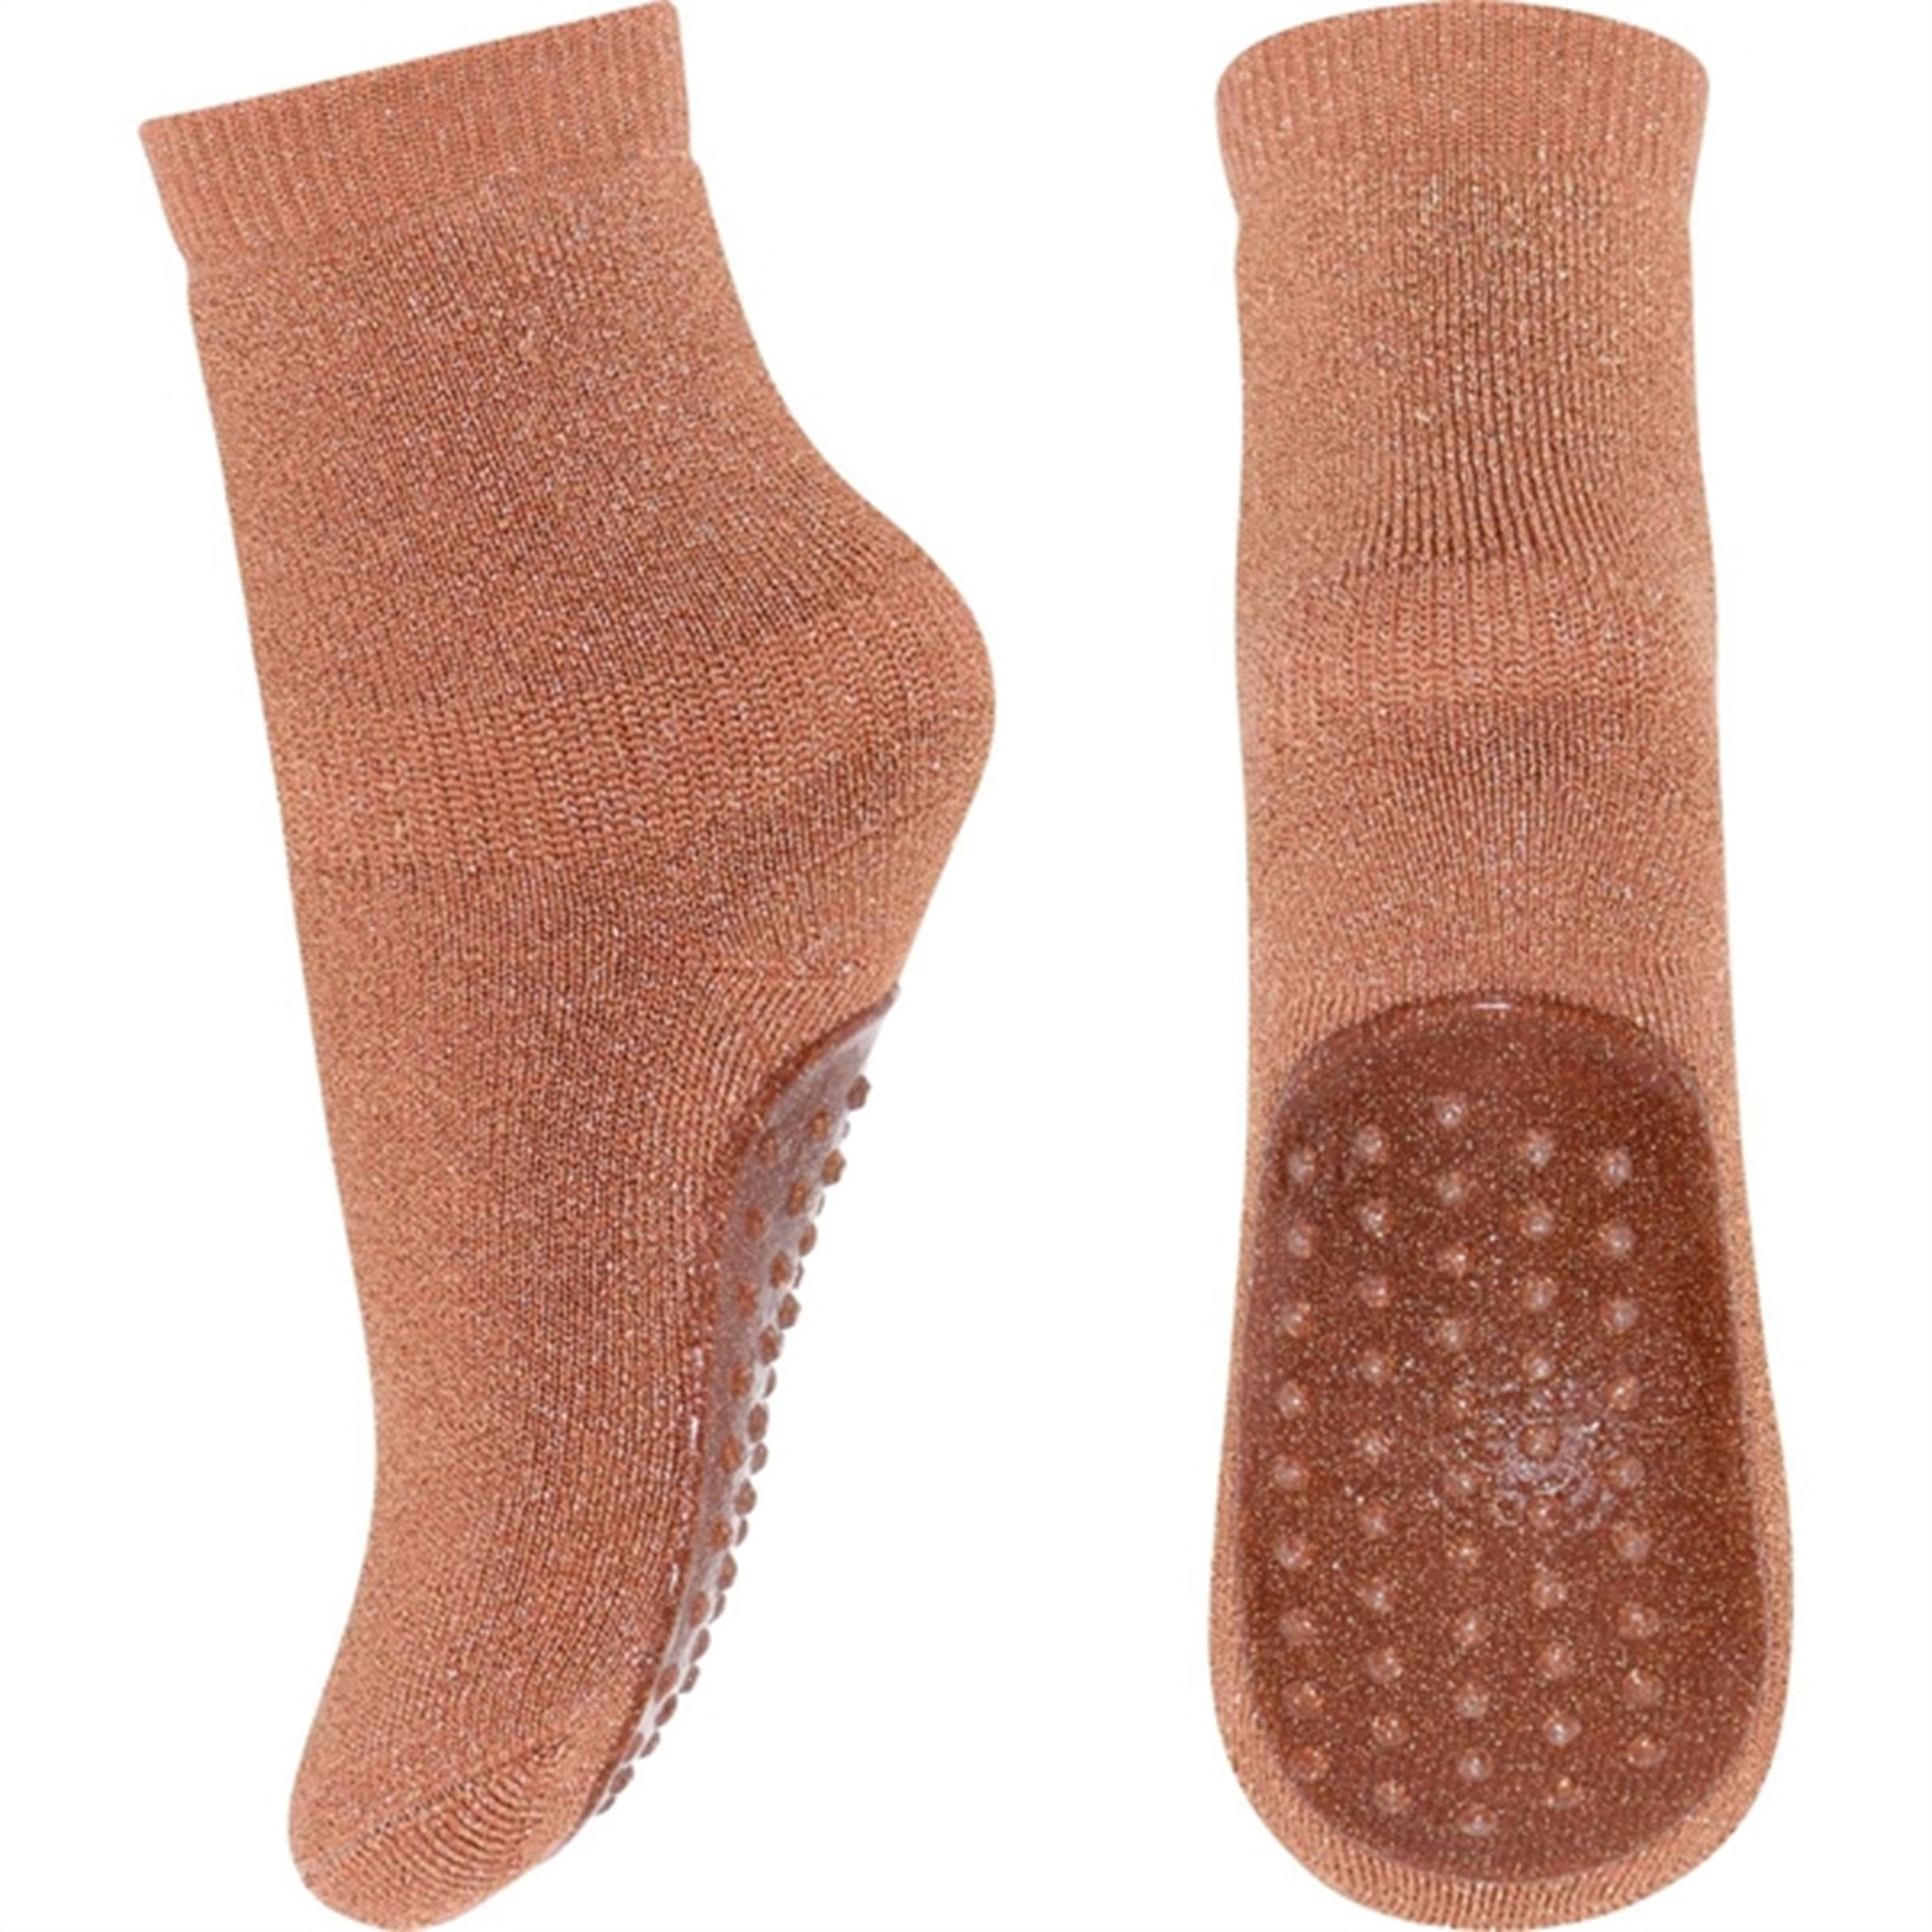 MP 79208 Celina Socks With Anti-Slip 2315 Metallic Glitter Copper Brown 2